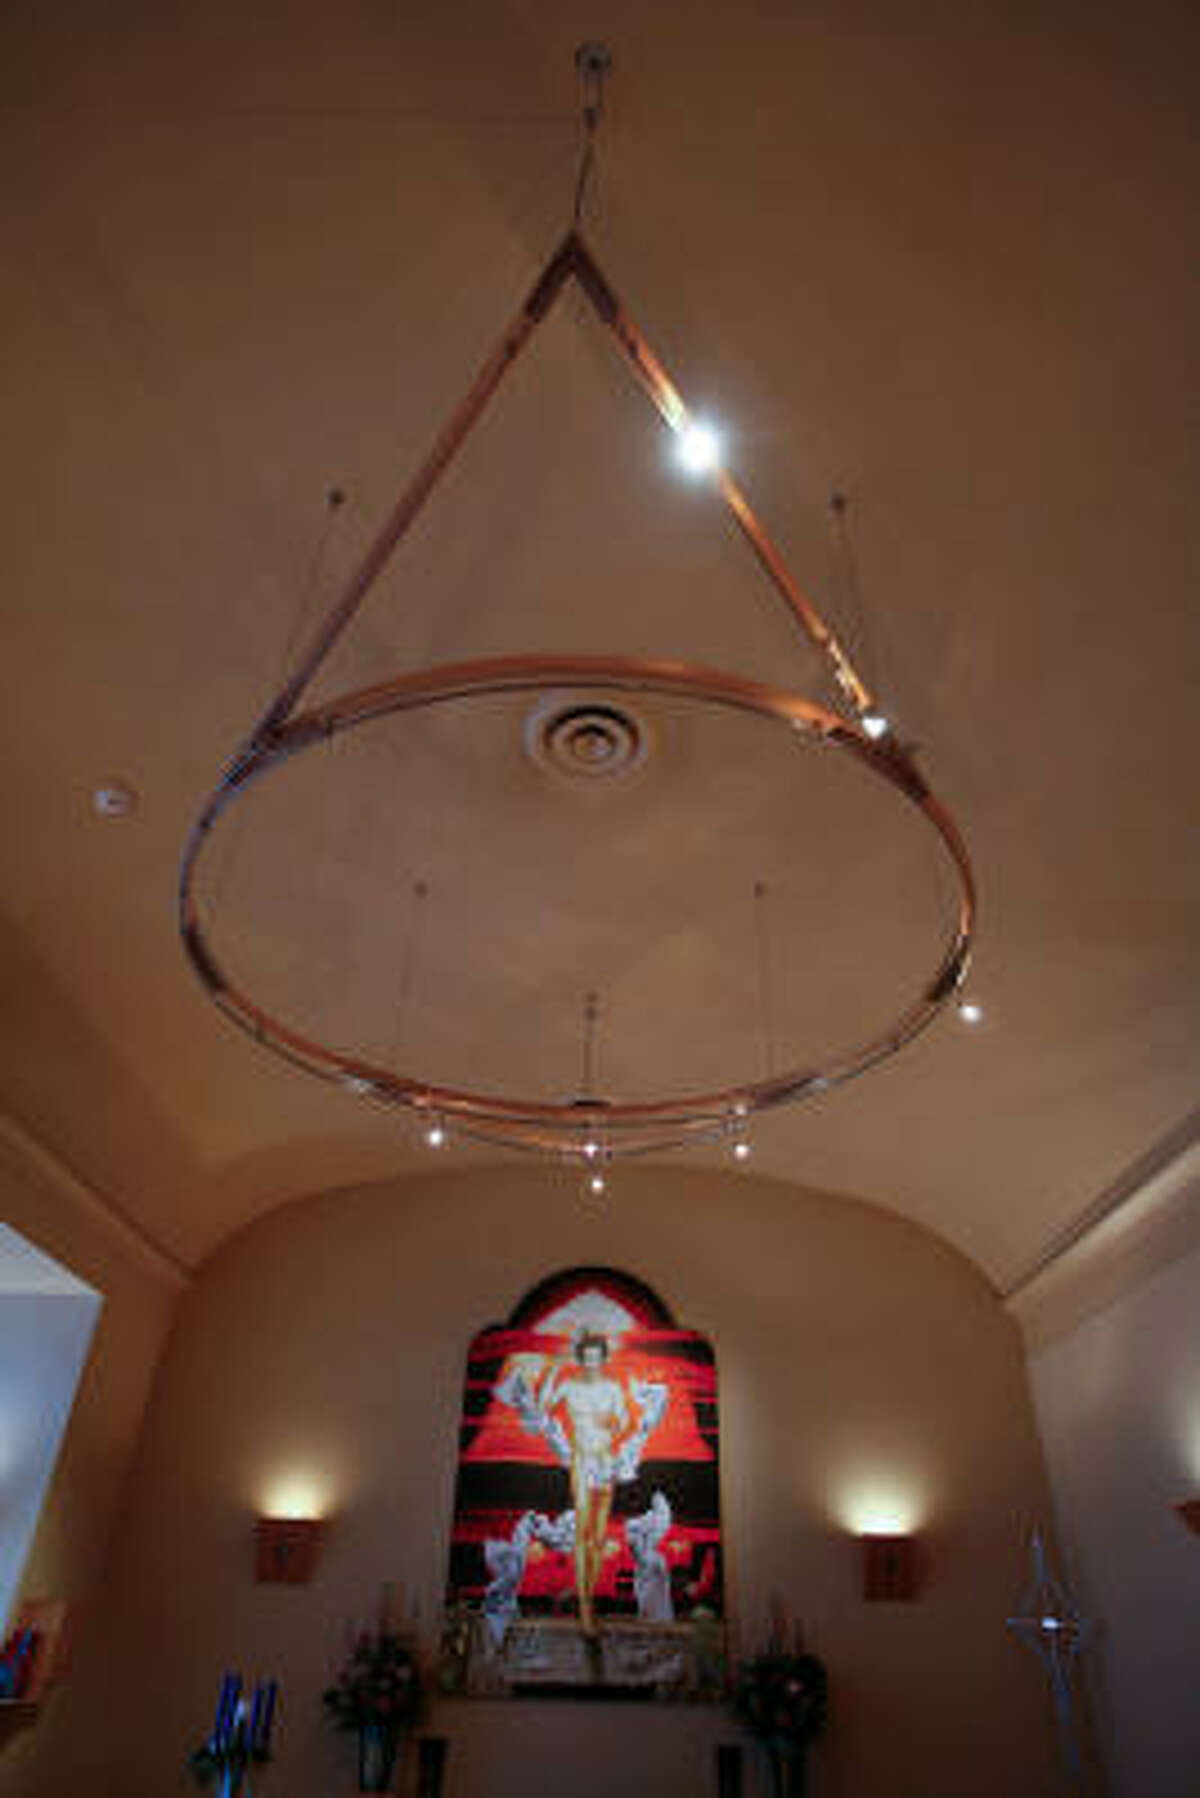 Kermit Olivers Resurrection decorates the altar. Troy Woods designed the chandelier.